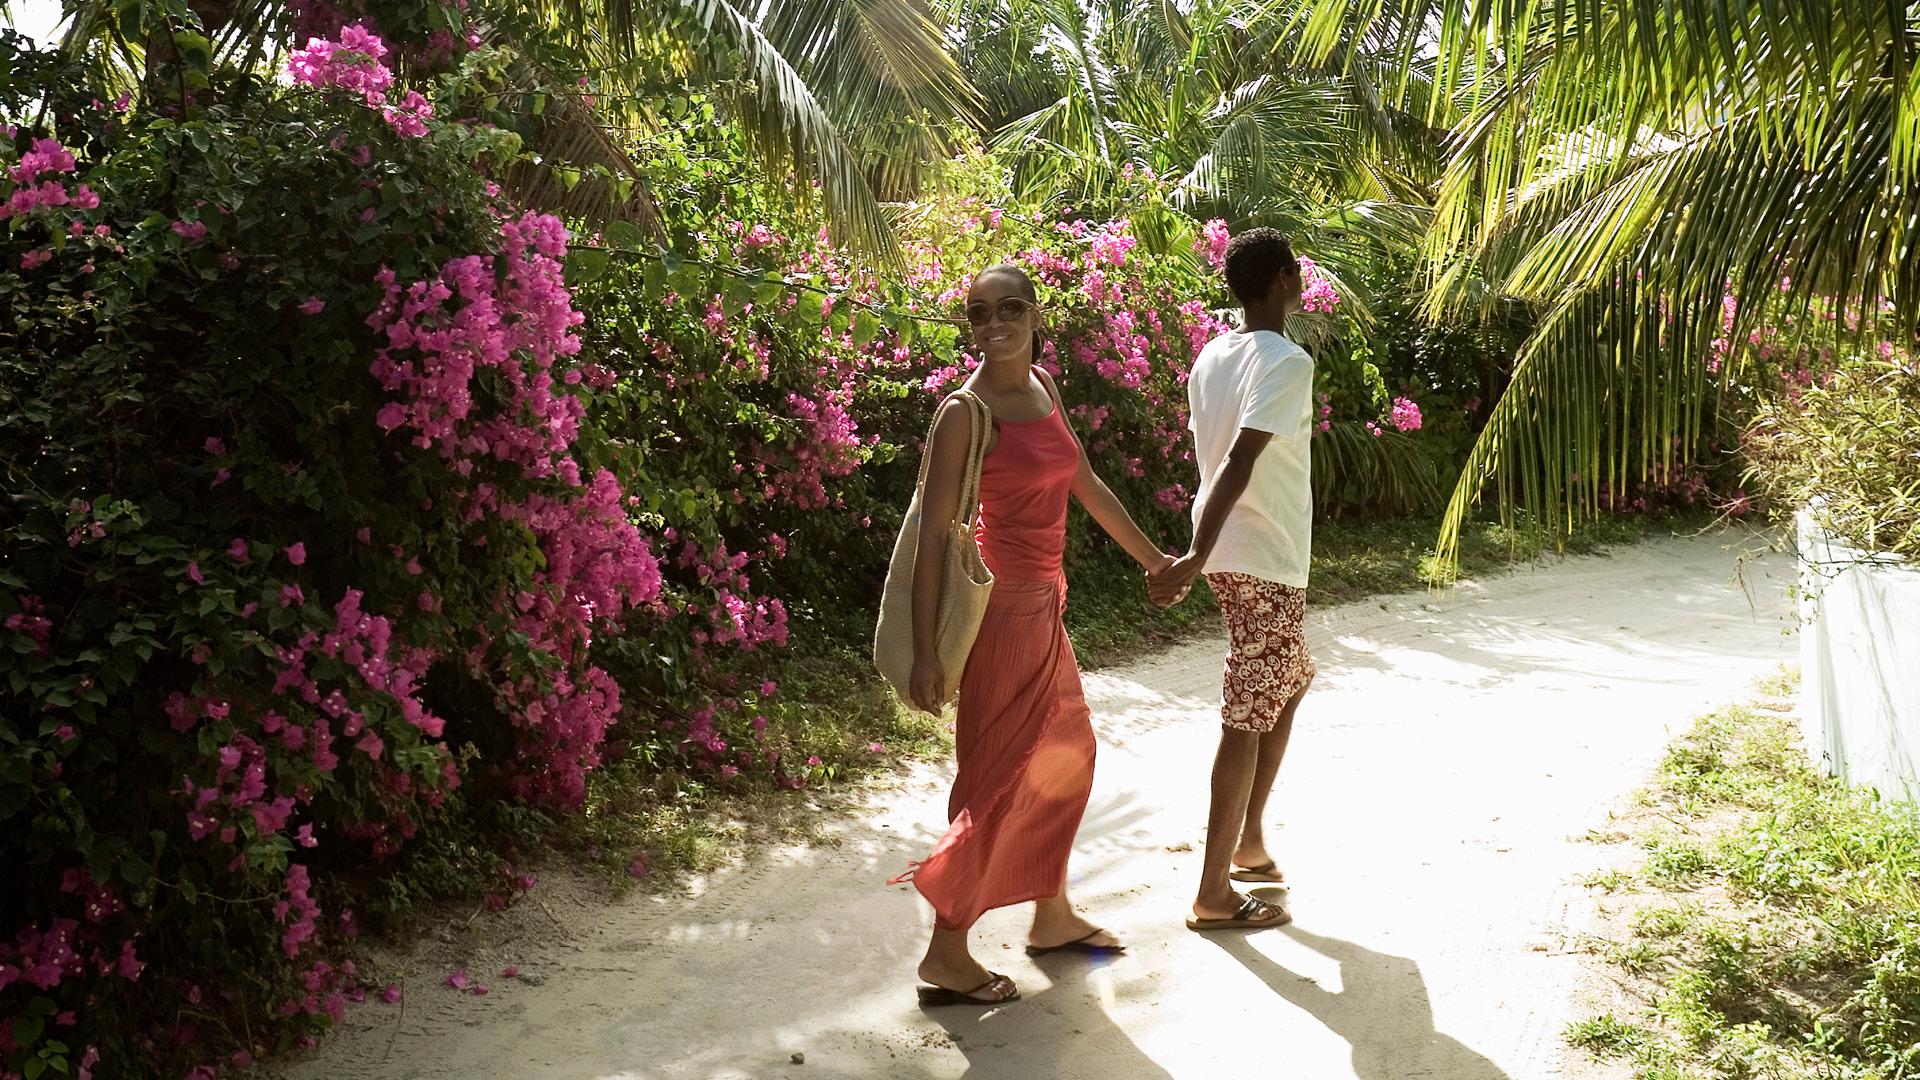 Caribbean Islands for Romance